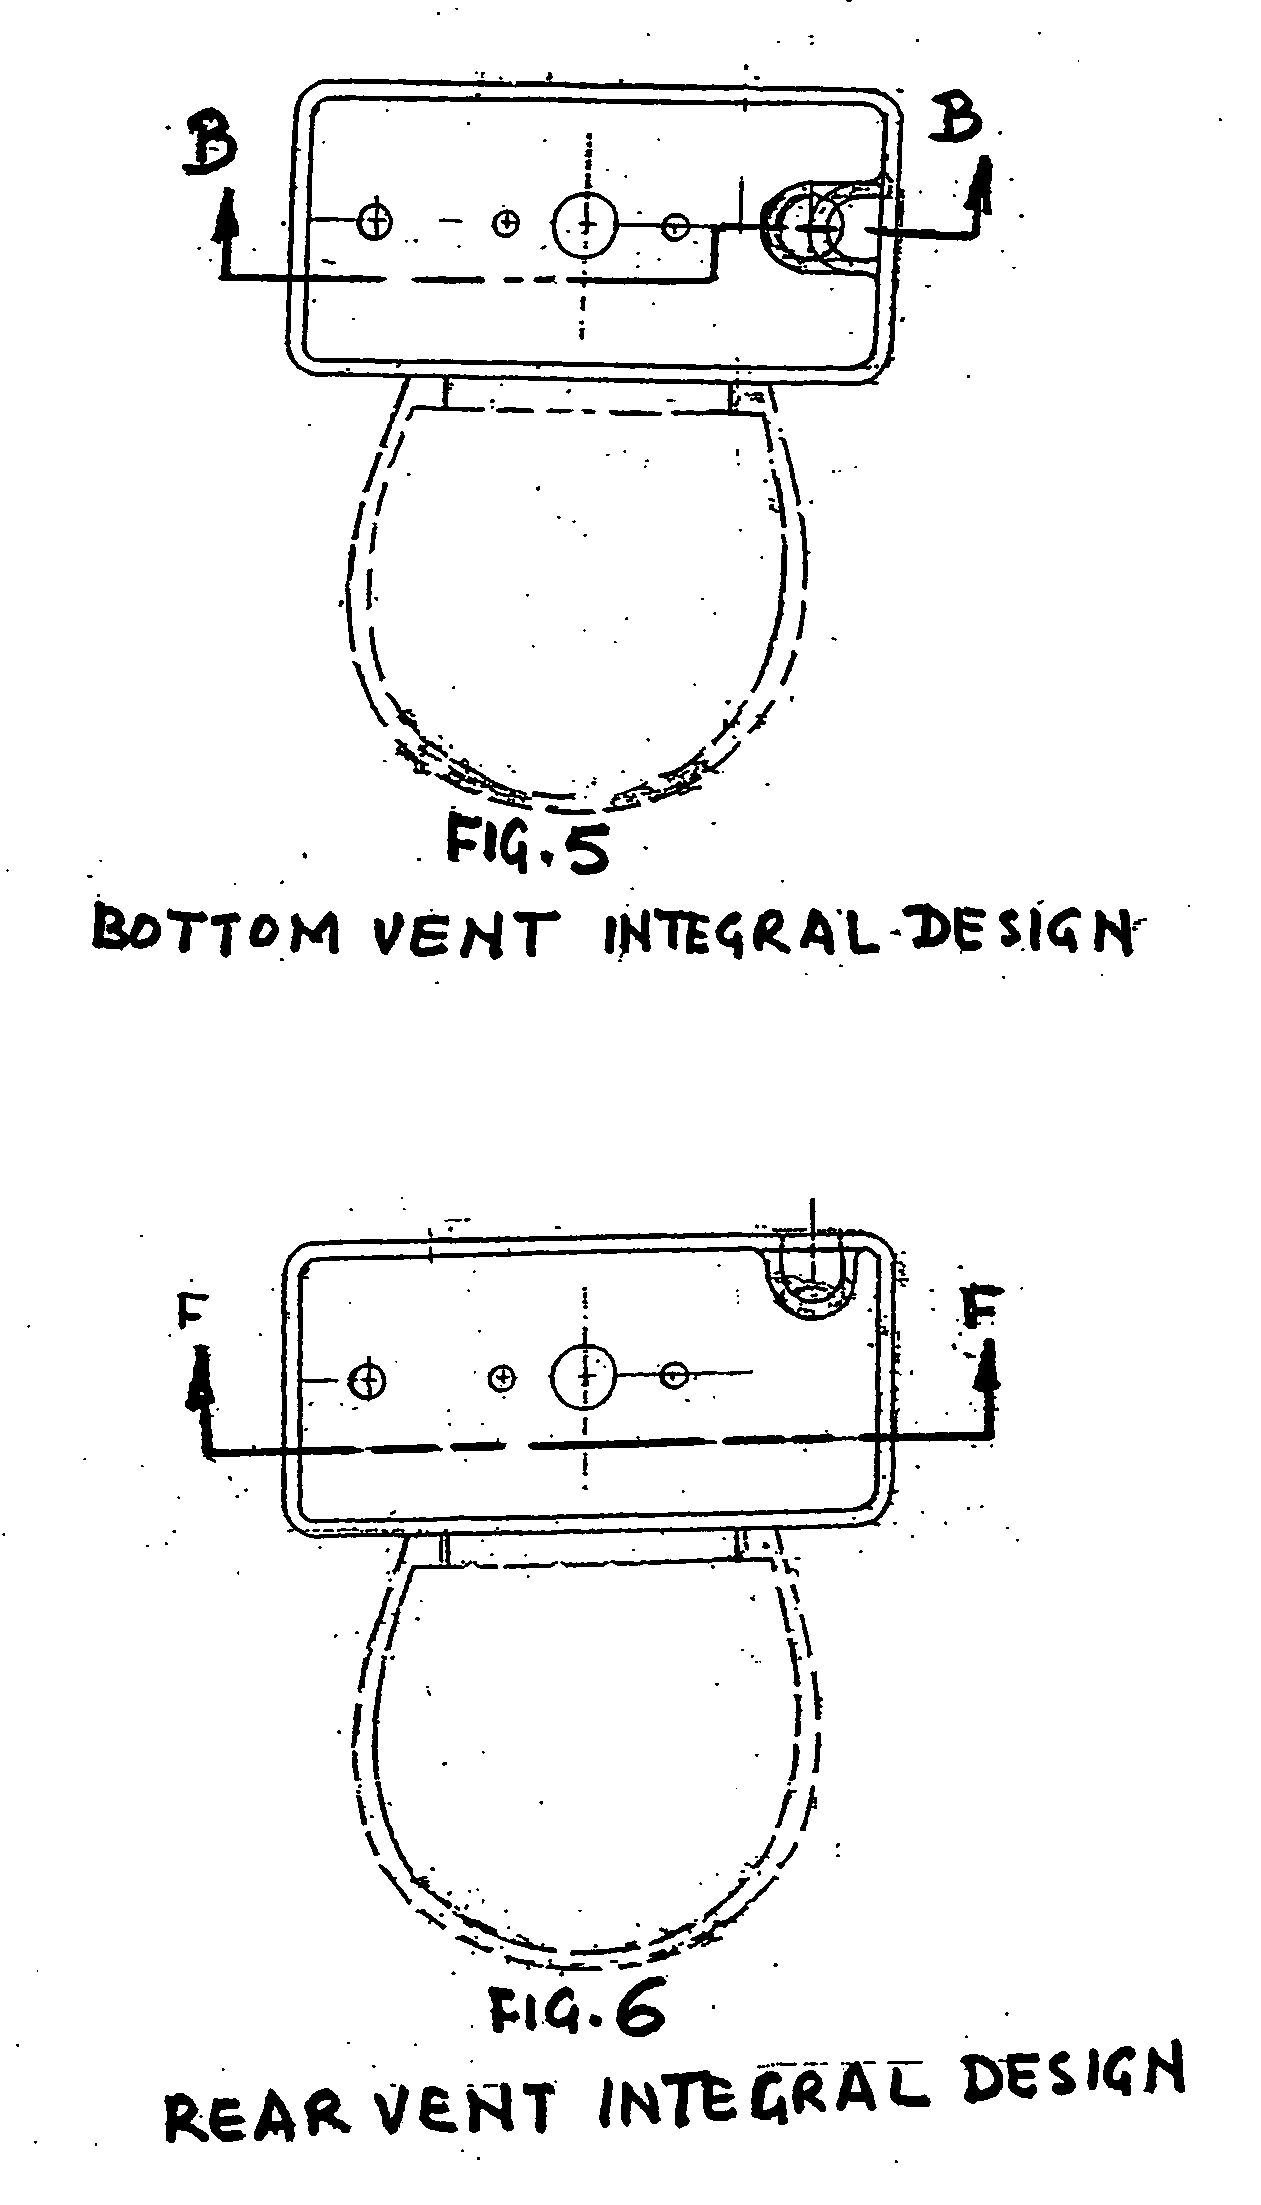 Central toilet/bathroom venting